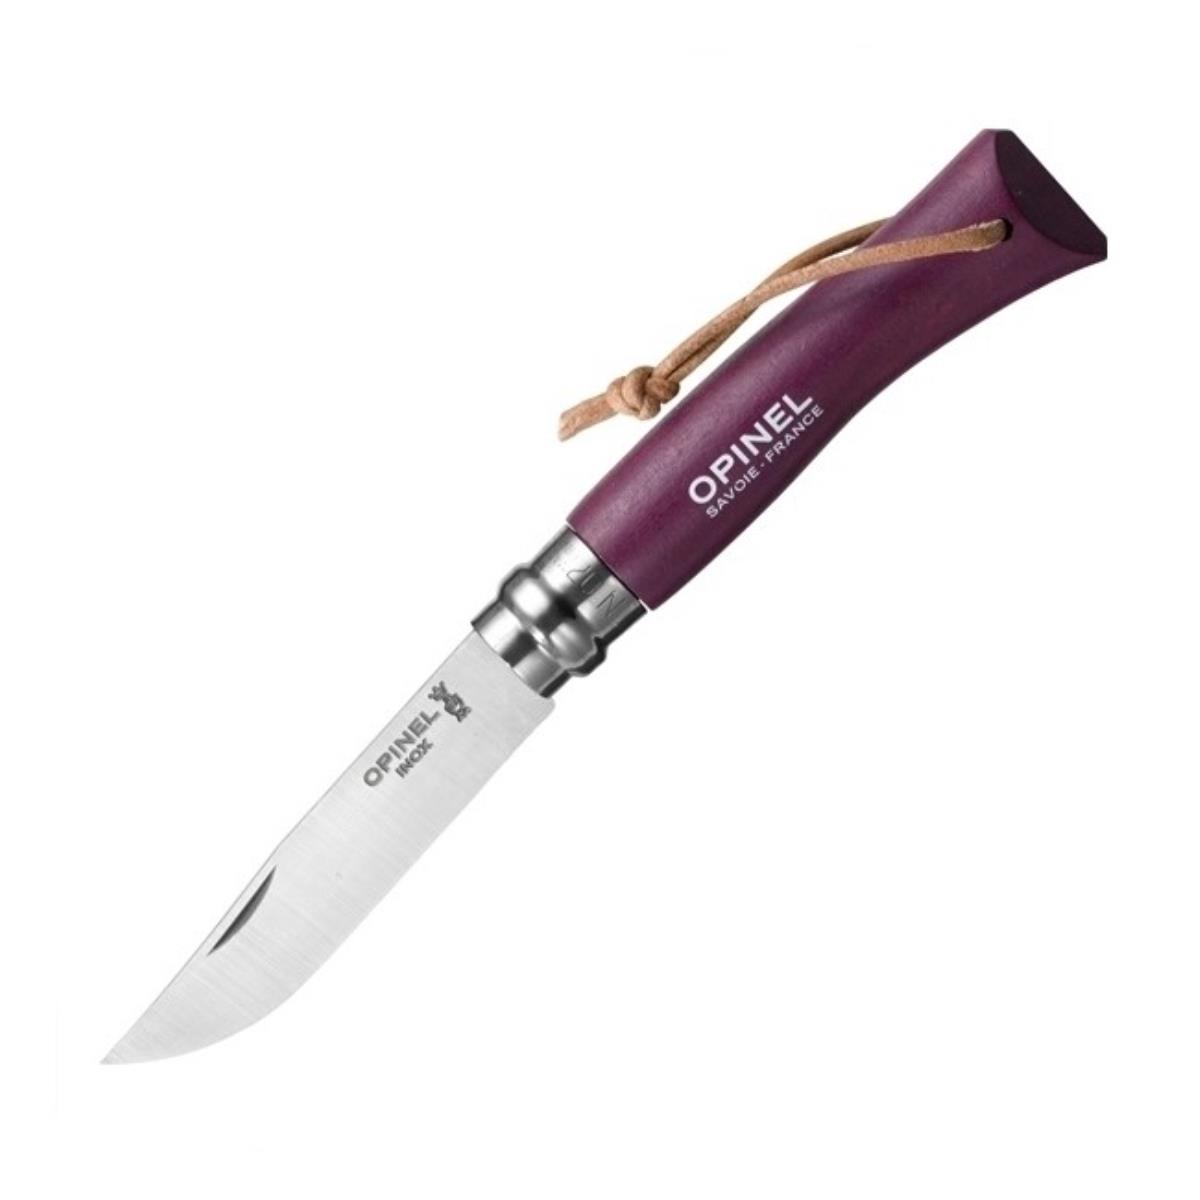 Нож №7 VRI Colored Tradition нерж. сталь, рукоять граб,  клинок 8см, темляк (слива) OPINEL